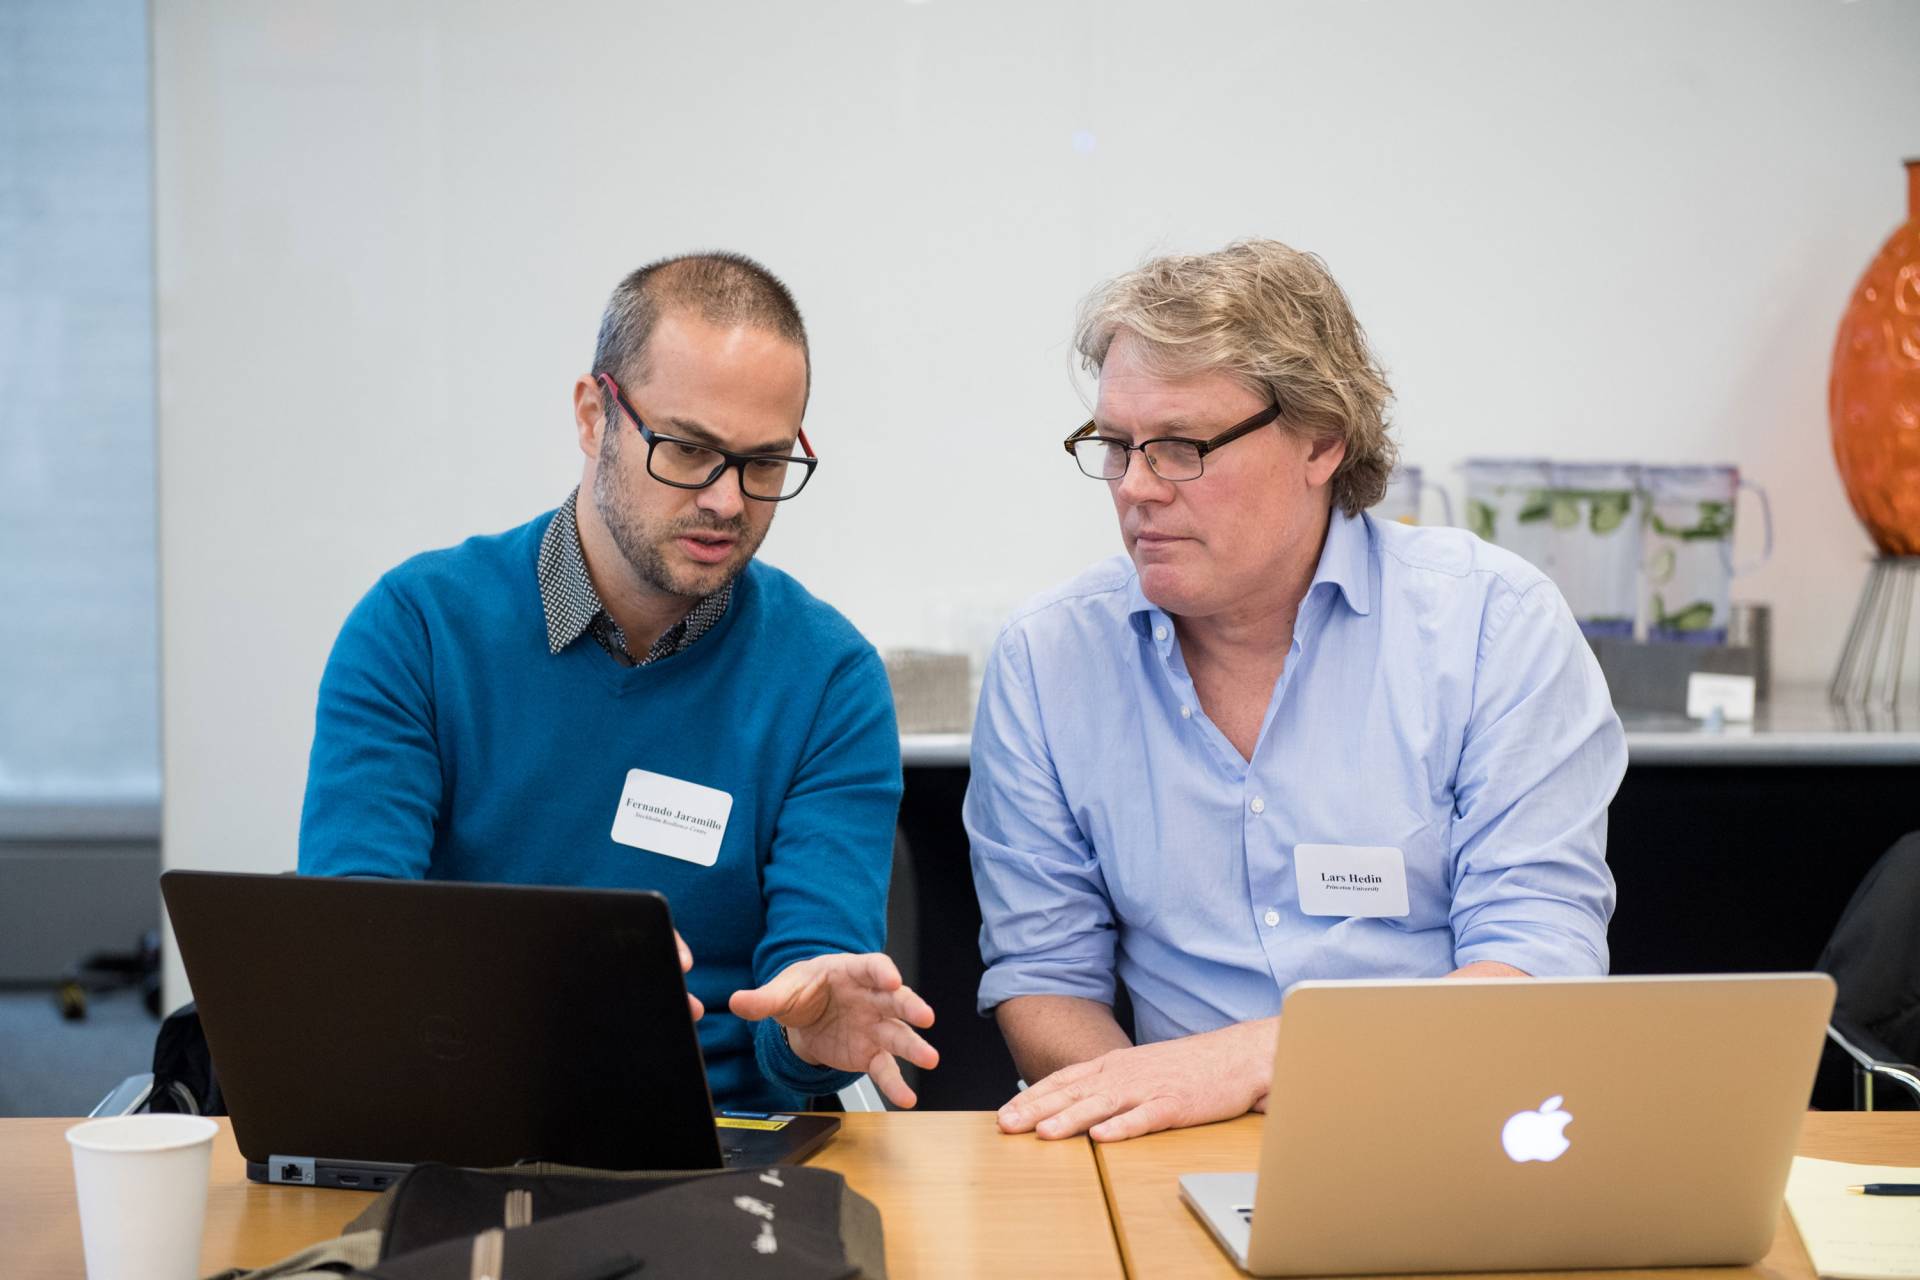 Fernando Jaramillo and Lars Hedin at Earth in 2050 workshop